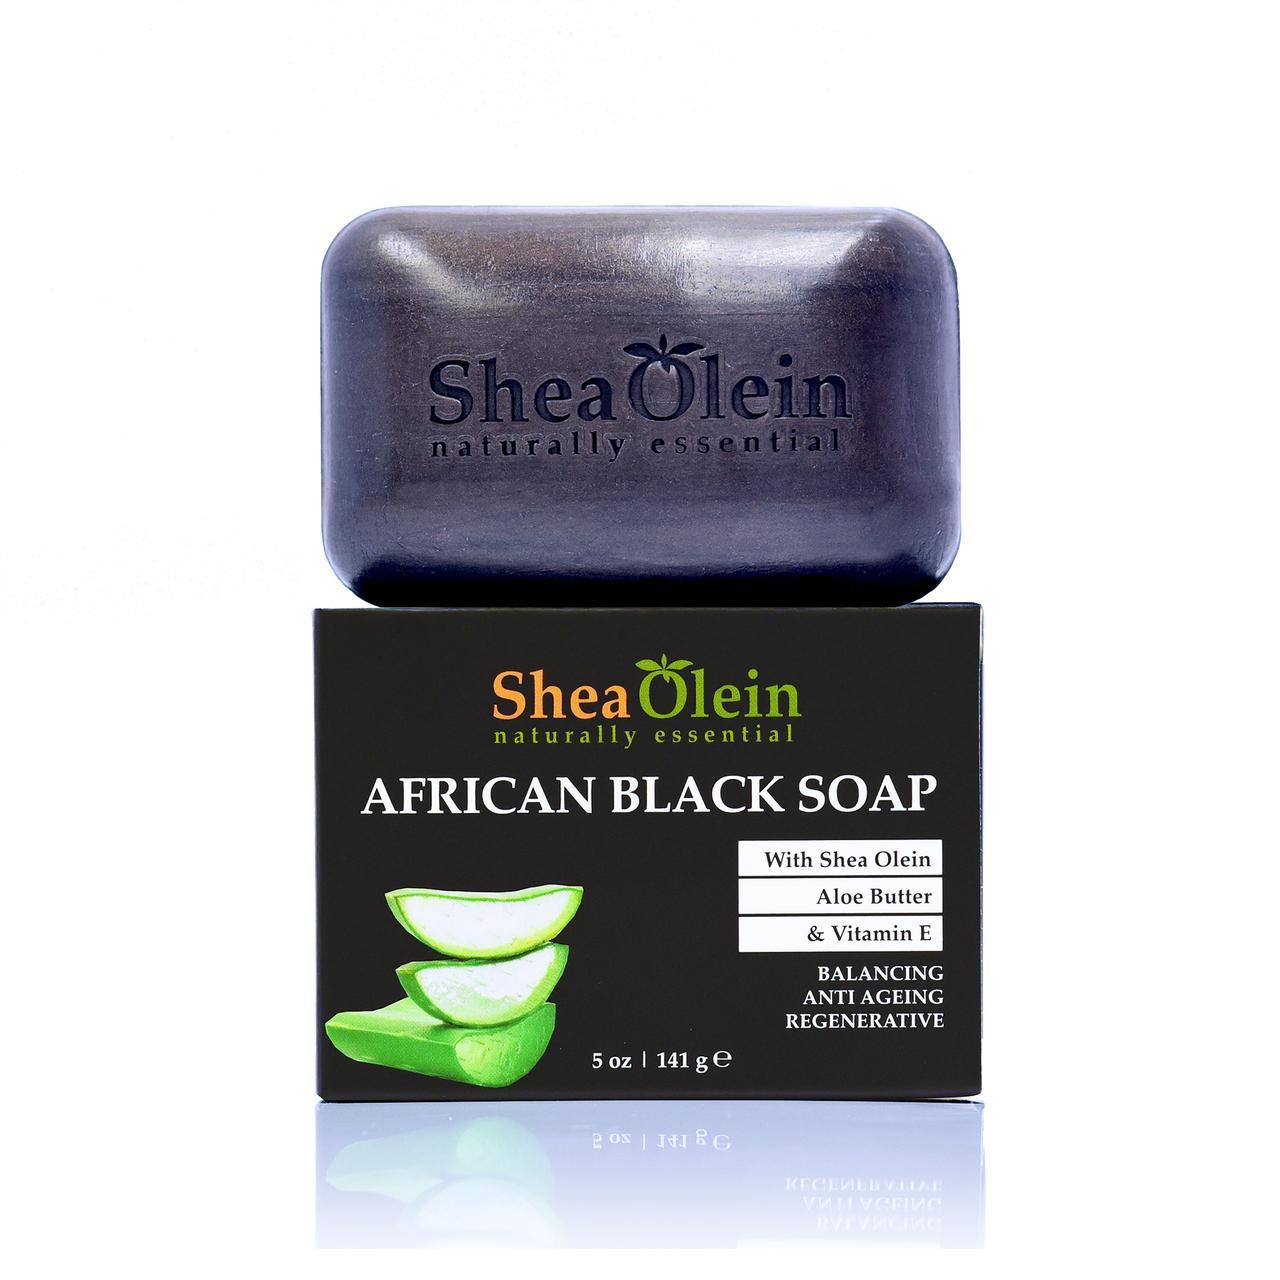 African Black Soap with Shea Olein, Aloe Butter & Vitamin E 5oz